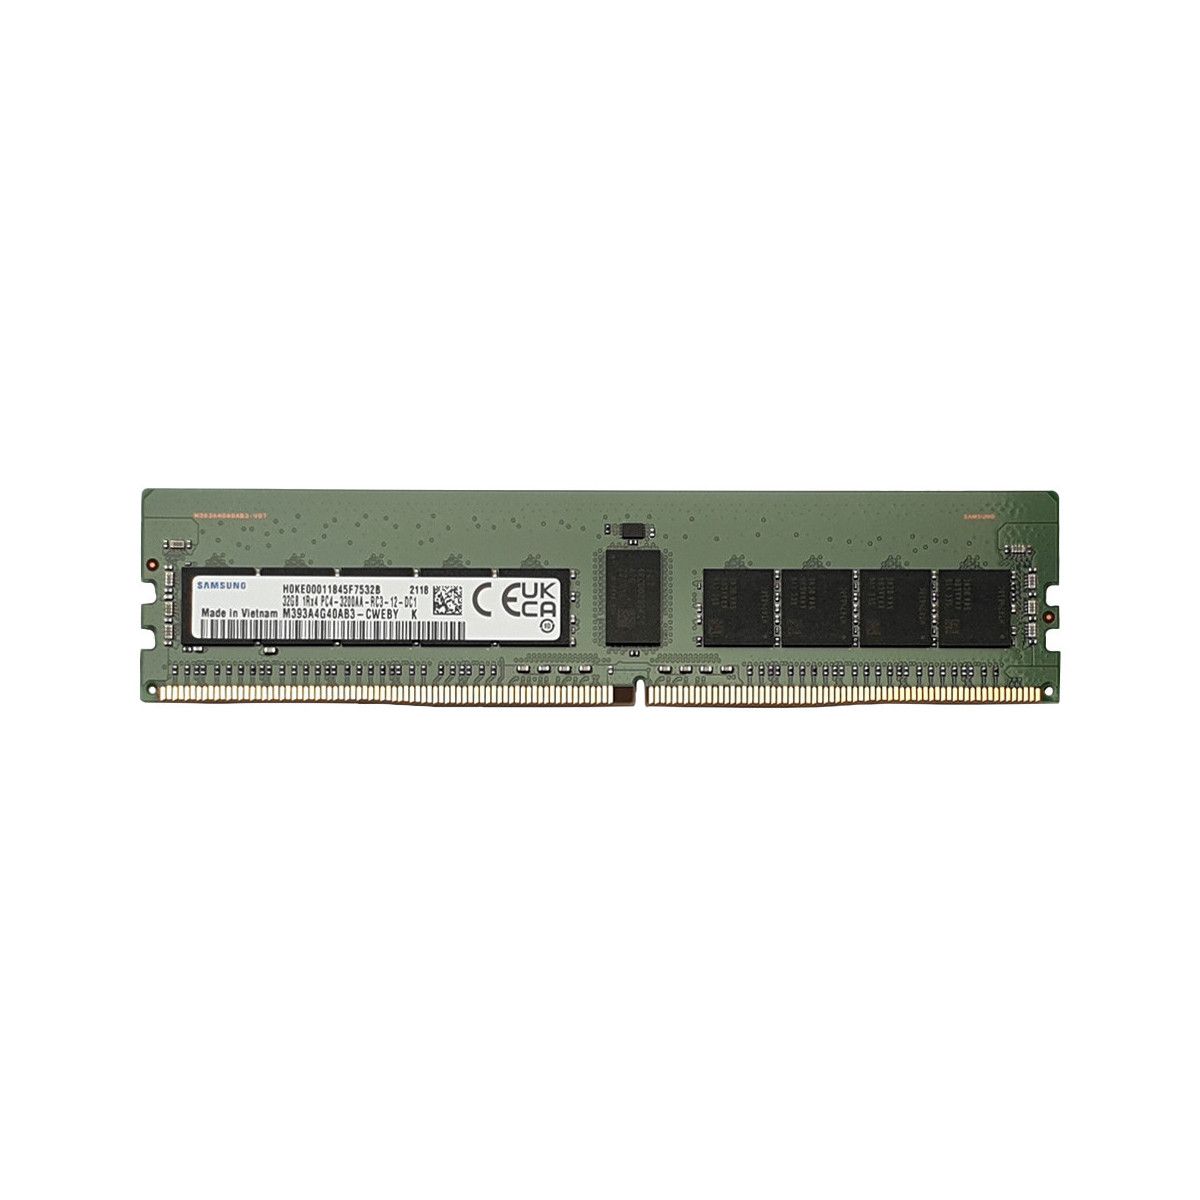 UCS-MR-X32G1RW-MS - Memstar 1x 32GB DDR4-3200 RDIMM PC4-25600R - Mem-Star compatibel OEM geheugen 1 - Memstar 